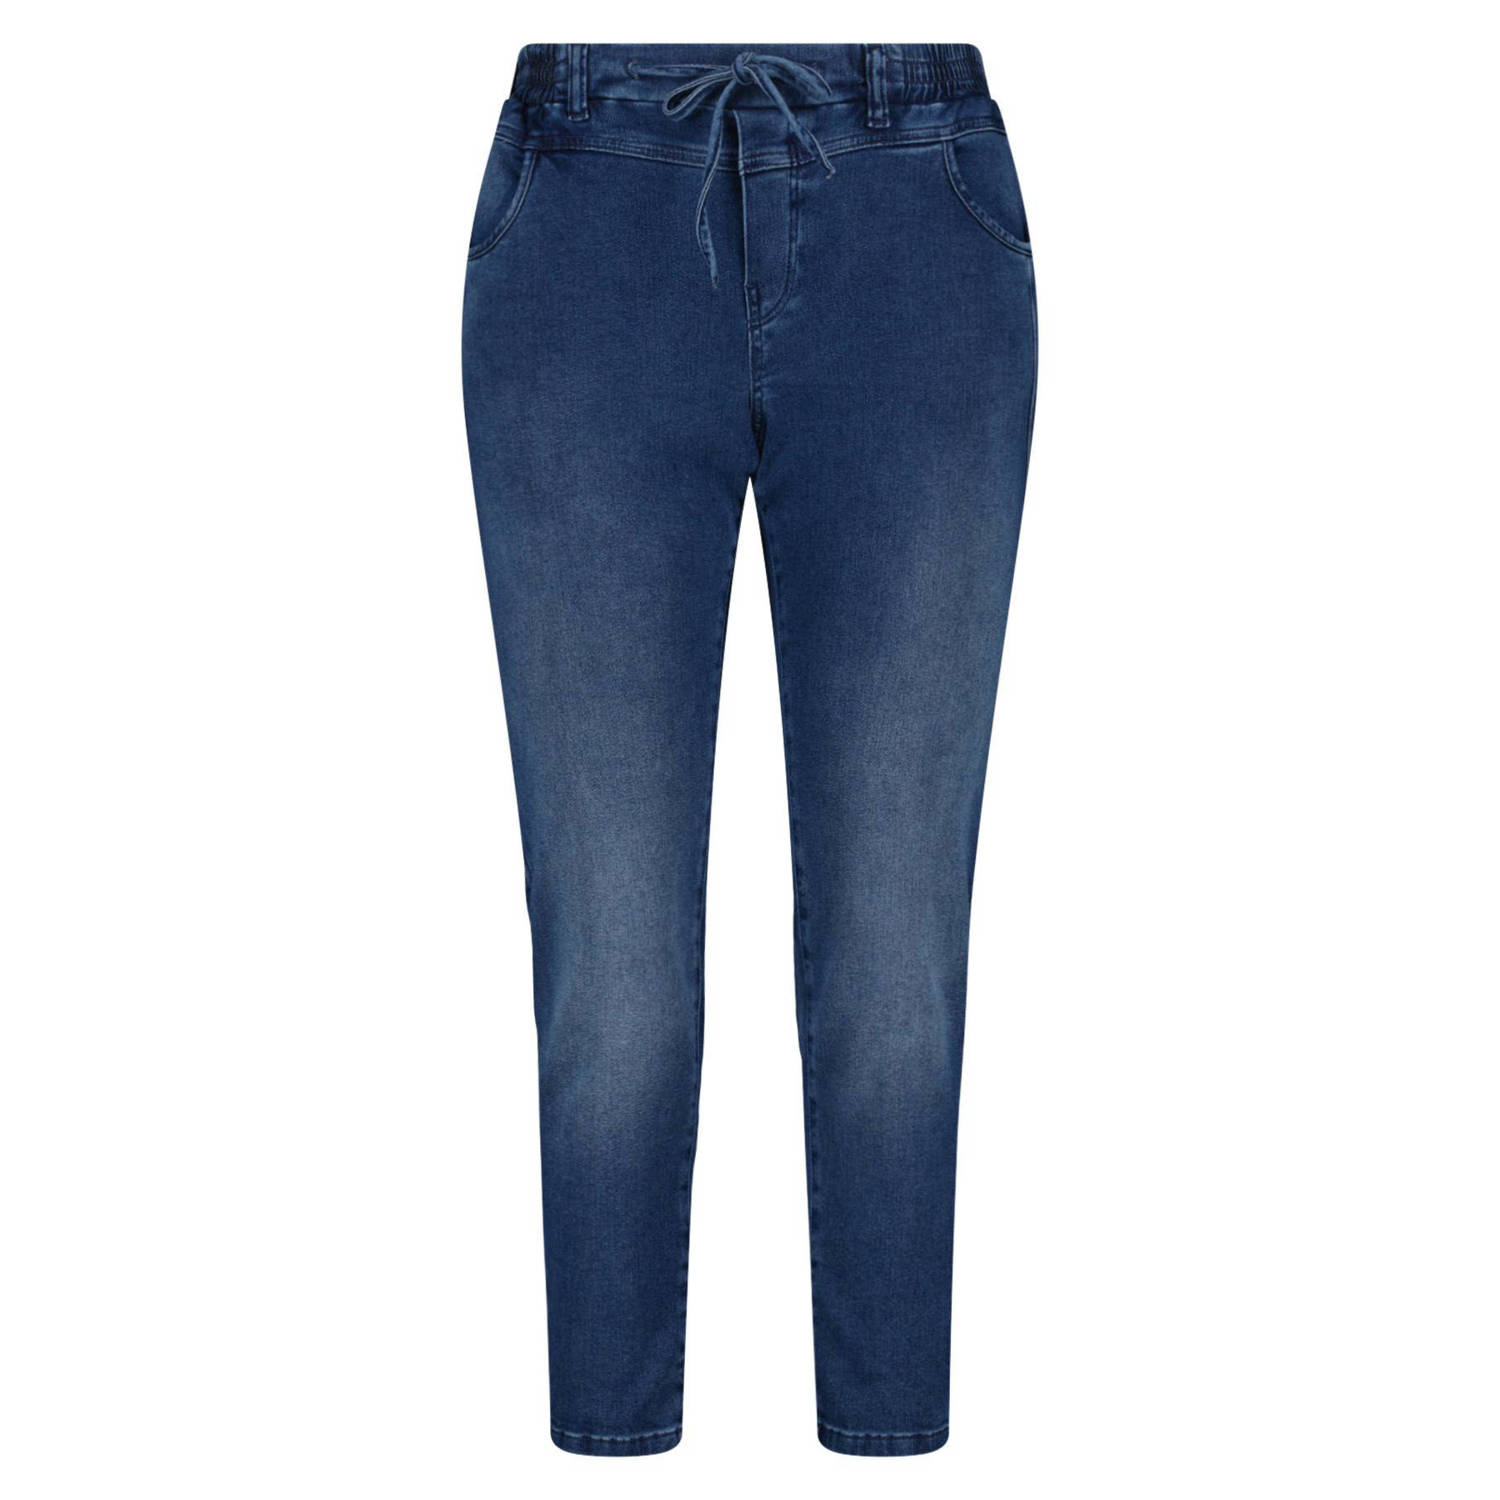 MS Mode jeans medium blue denim